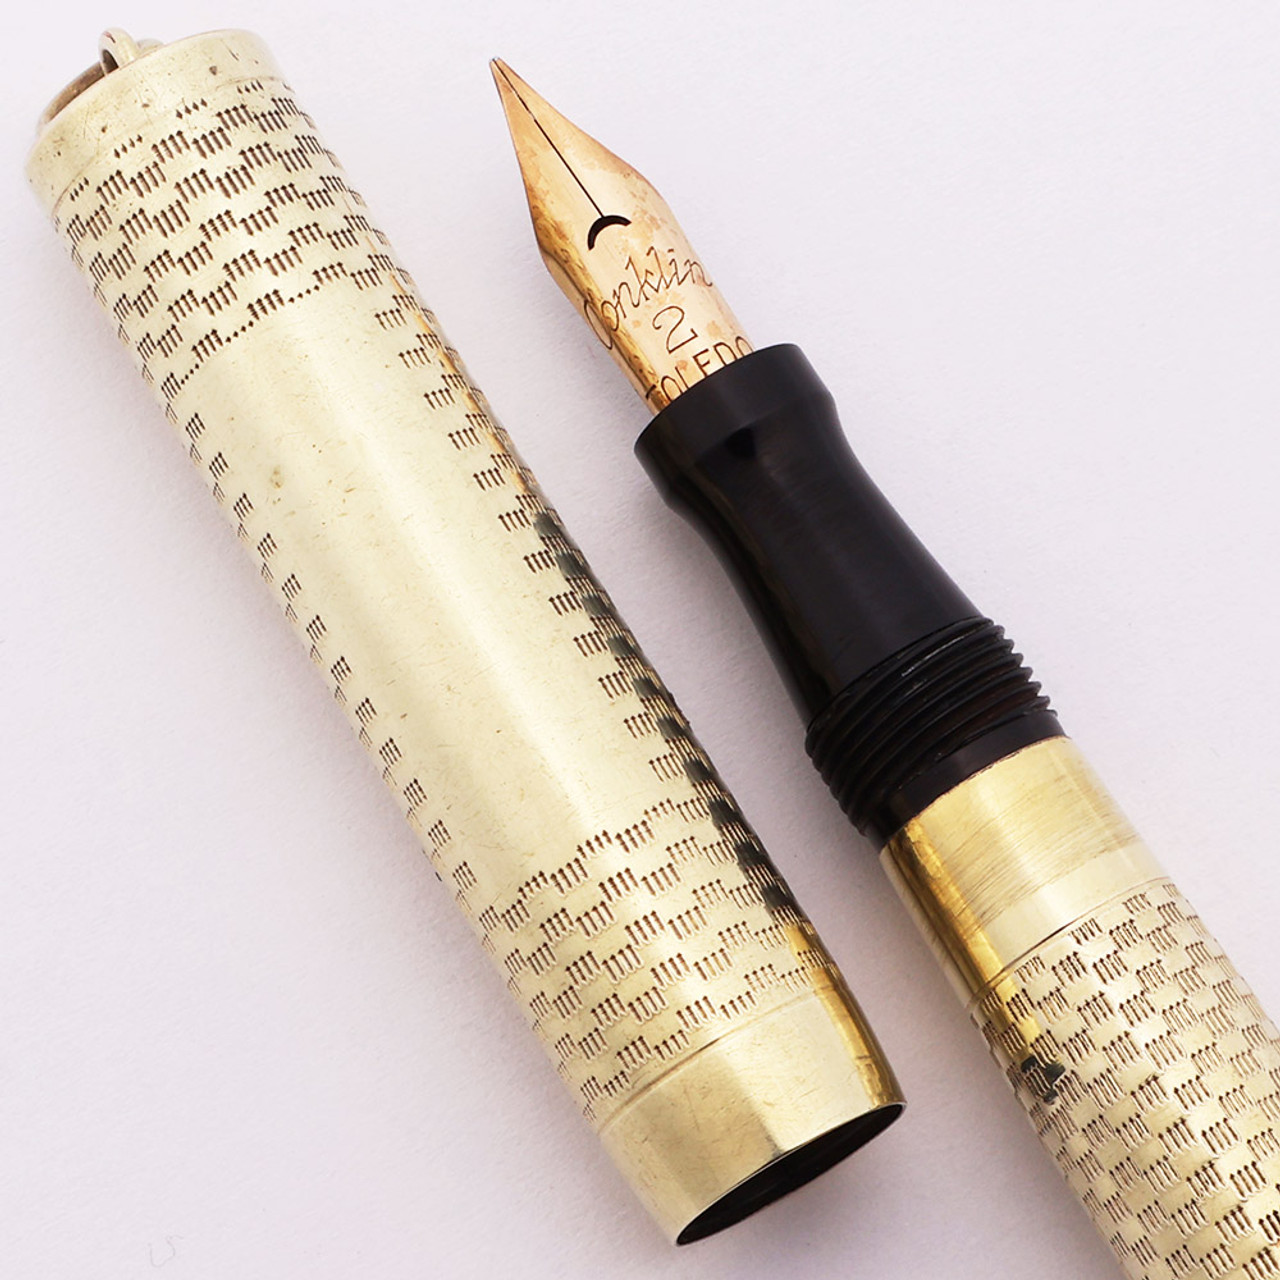 Conklin Crescent 2 Fountain Pen - Checked Gold Filled Overlay, Flexible Medium 14k #2 Nib (Excellent, Restored)